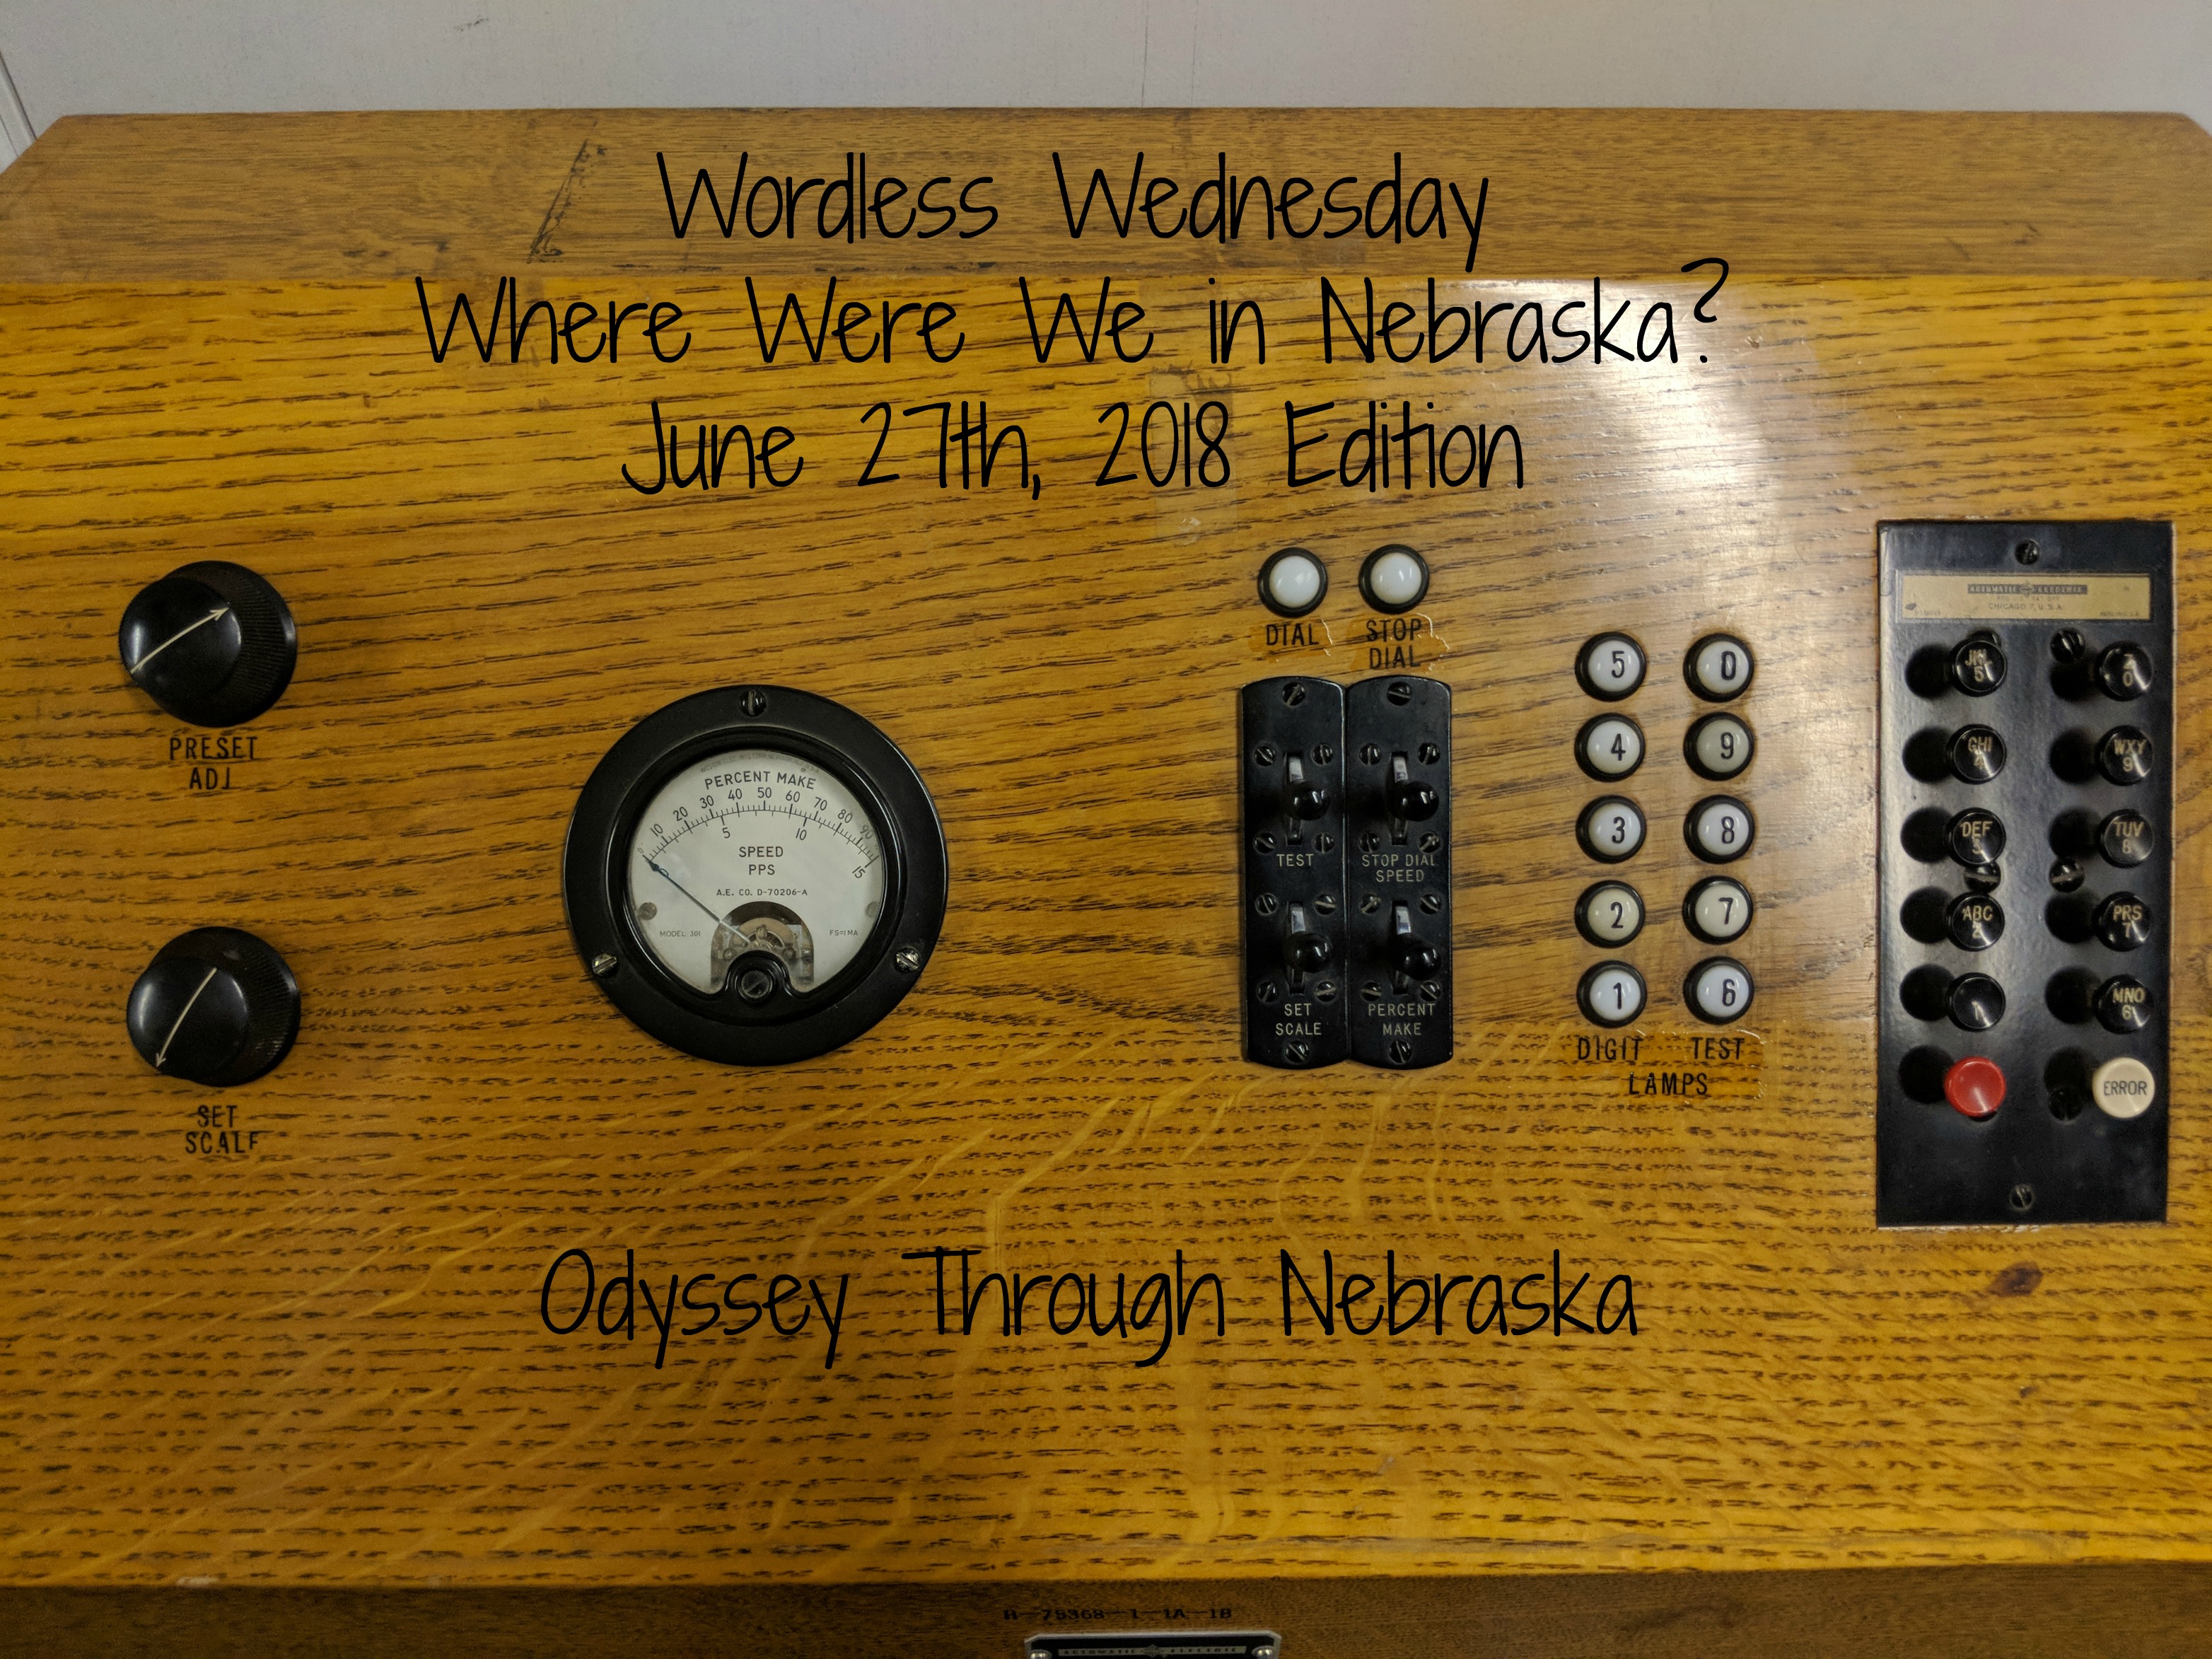 6-27-18 Wordless Wednesday Where Were We in Nebraska